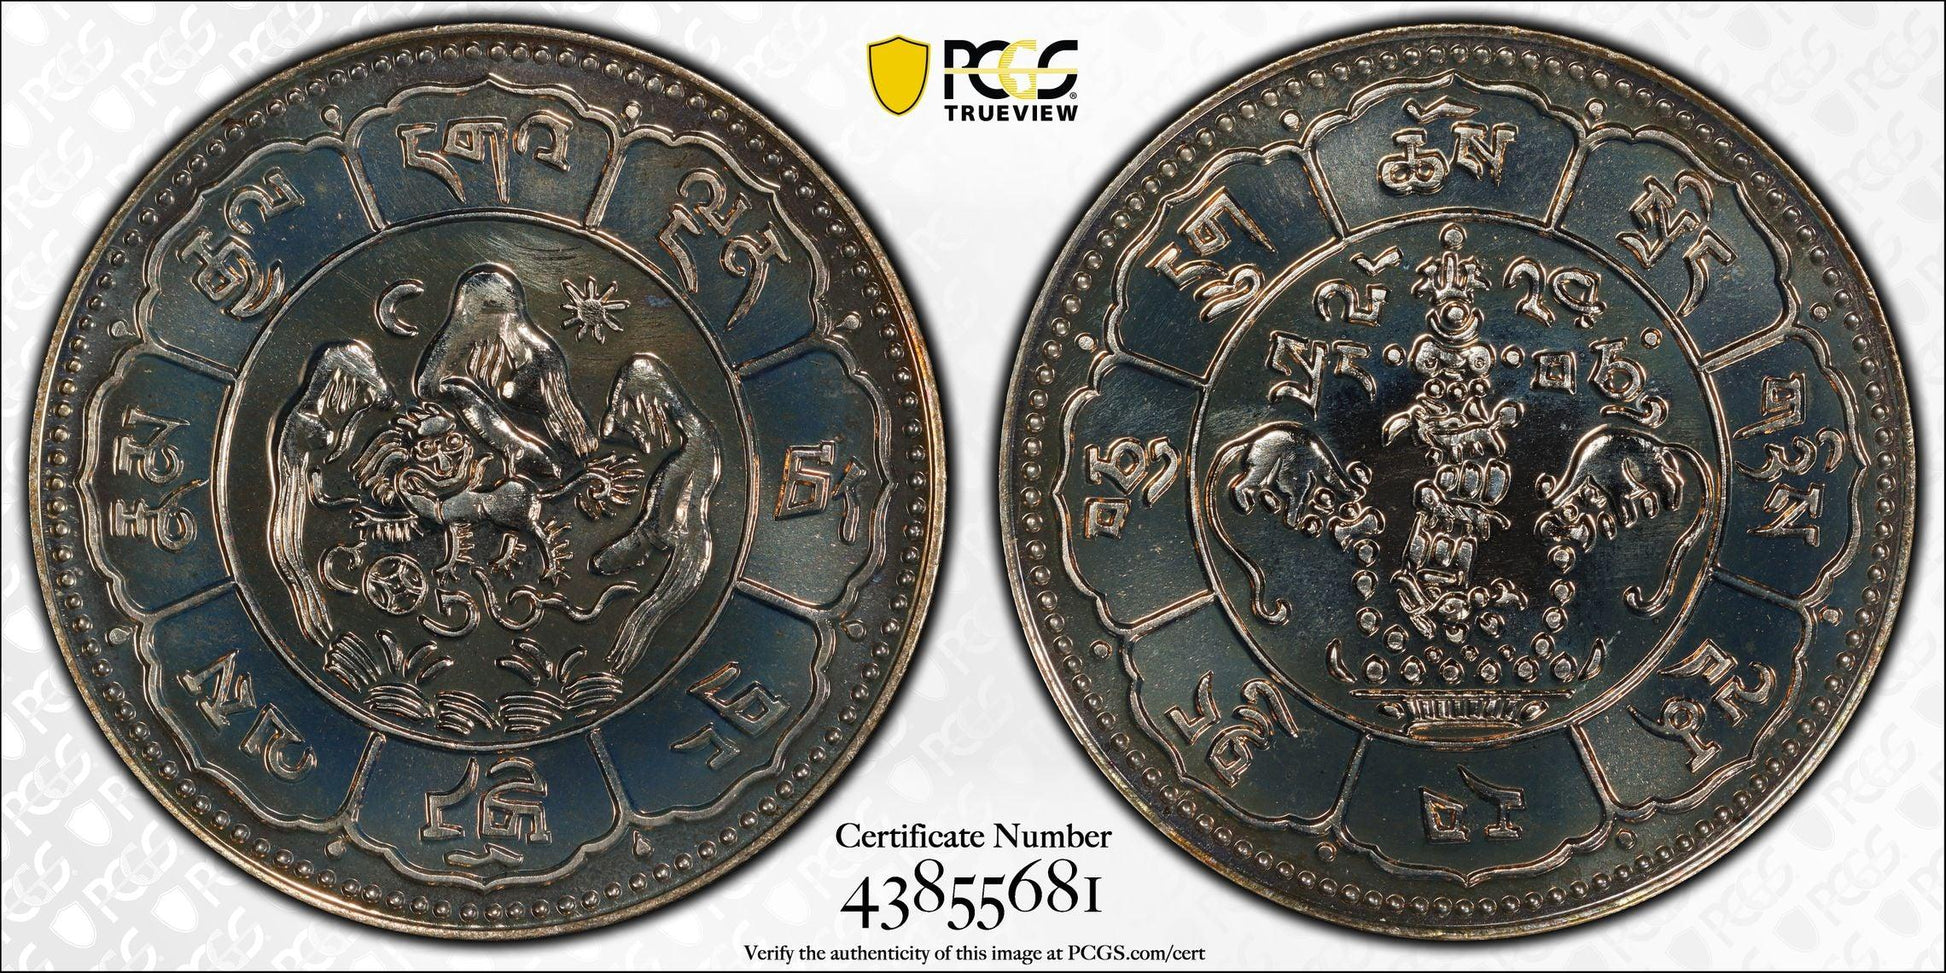 Tibet "(1950) 24" X#4 Fantasy CuNi 1978 Strike - 10 Srang - Graded PR68 by PCGS - CERT VERIFICATION #43855681 - Loose Change Coins